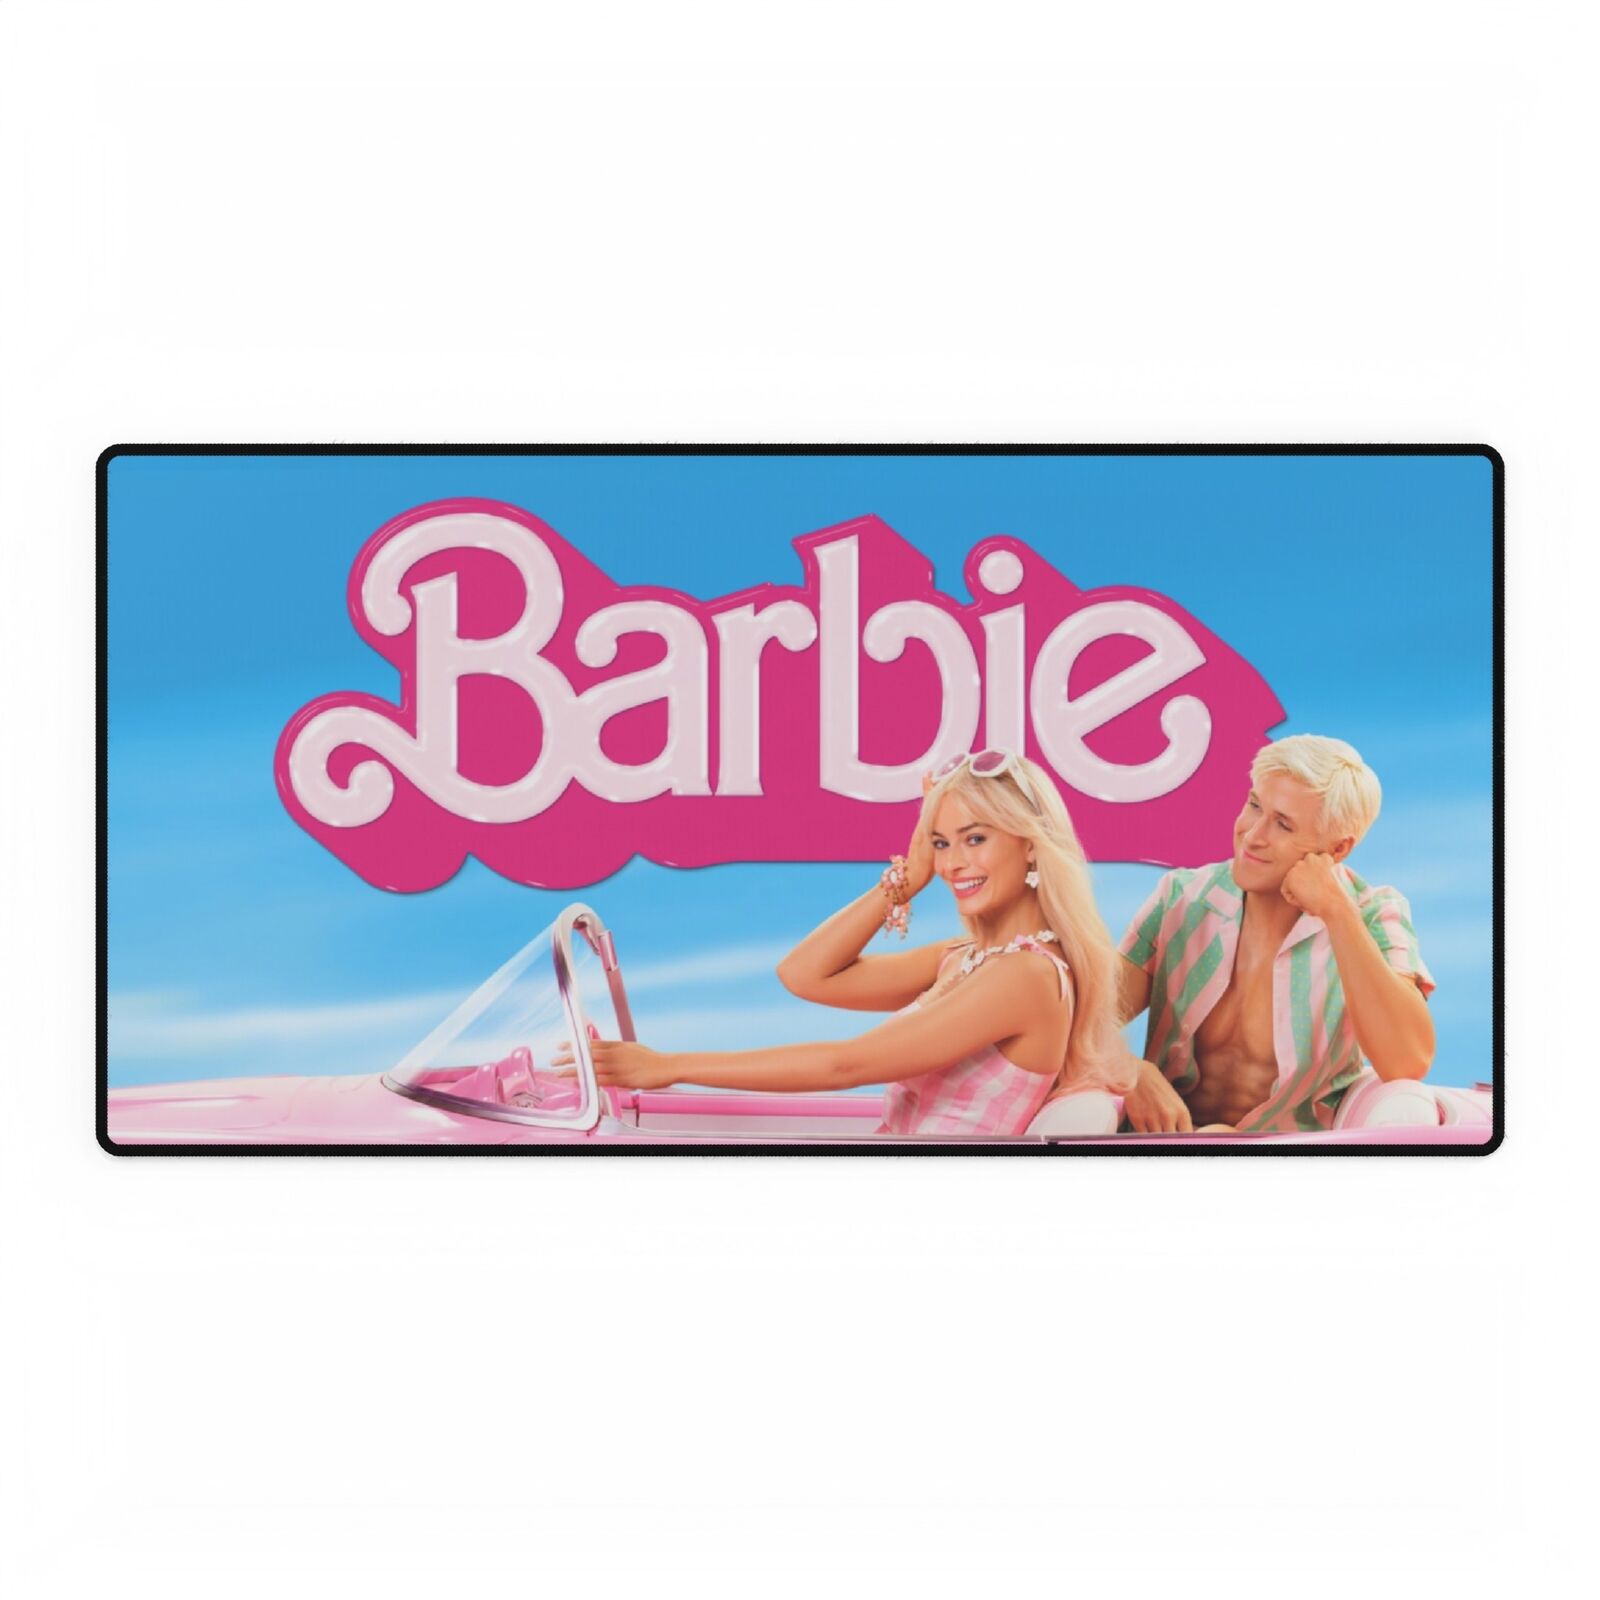 Barbie Movie High Definition PC PS Video Game Desk Mat Mousepad